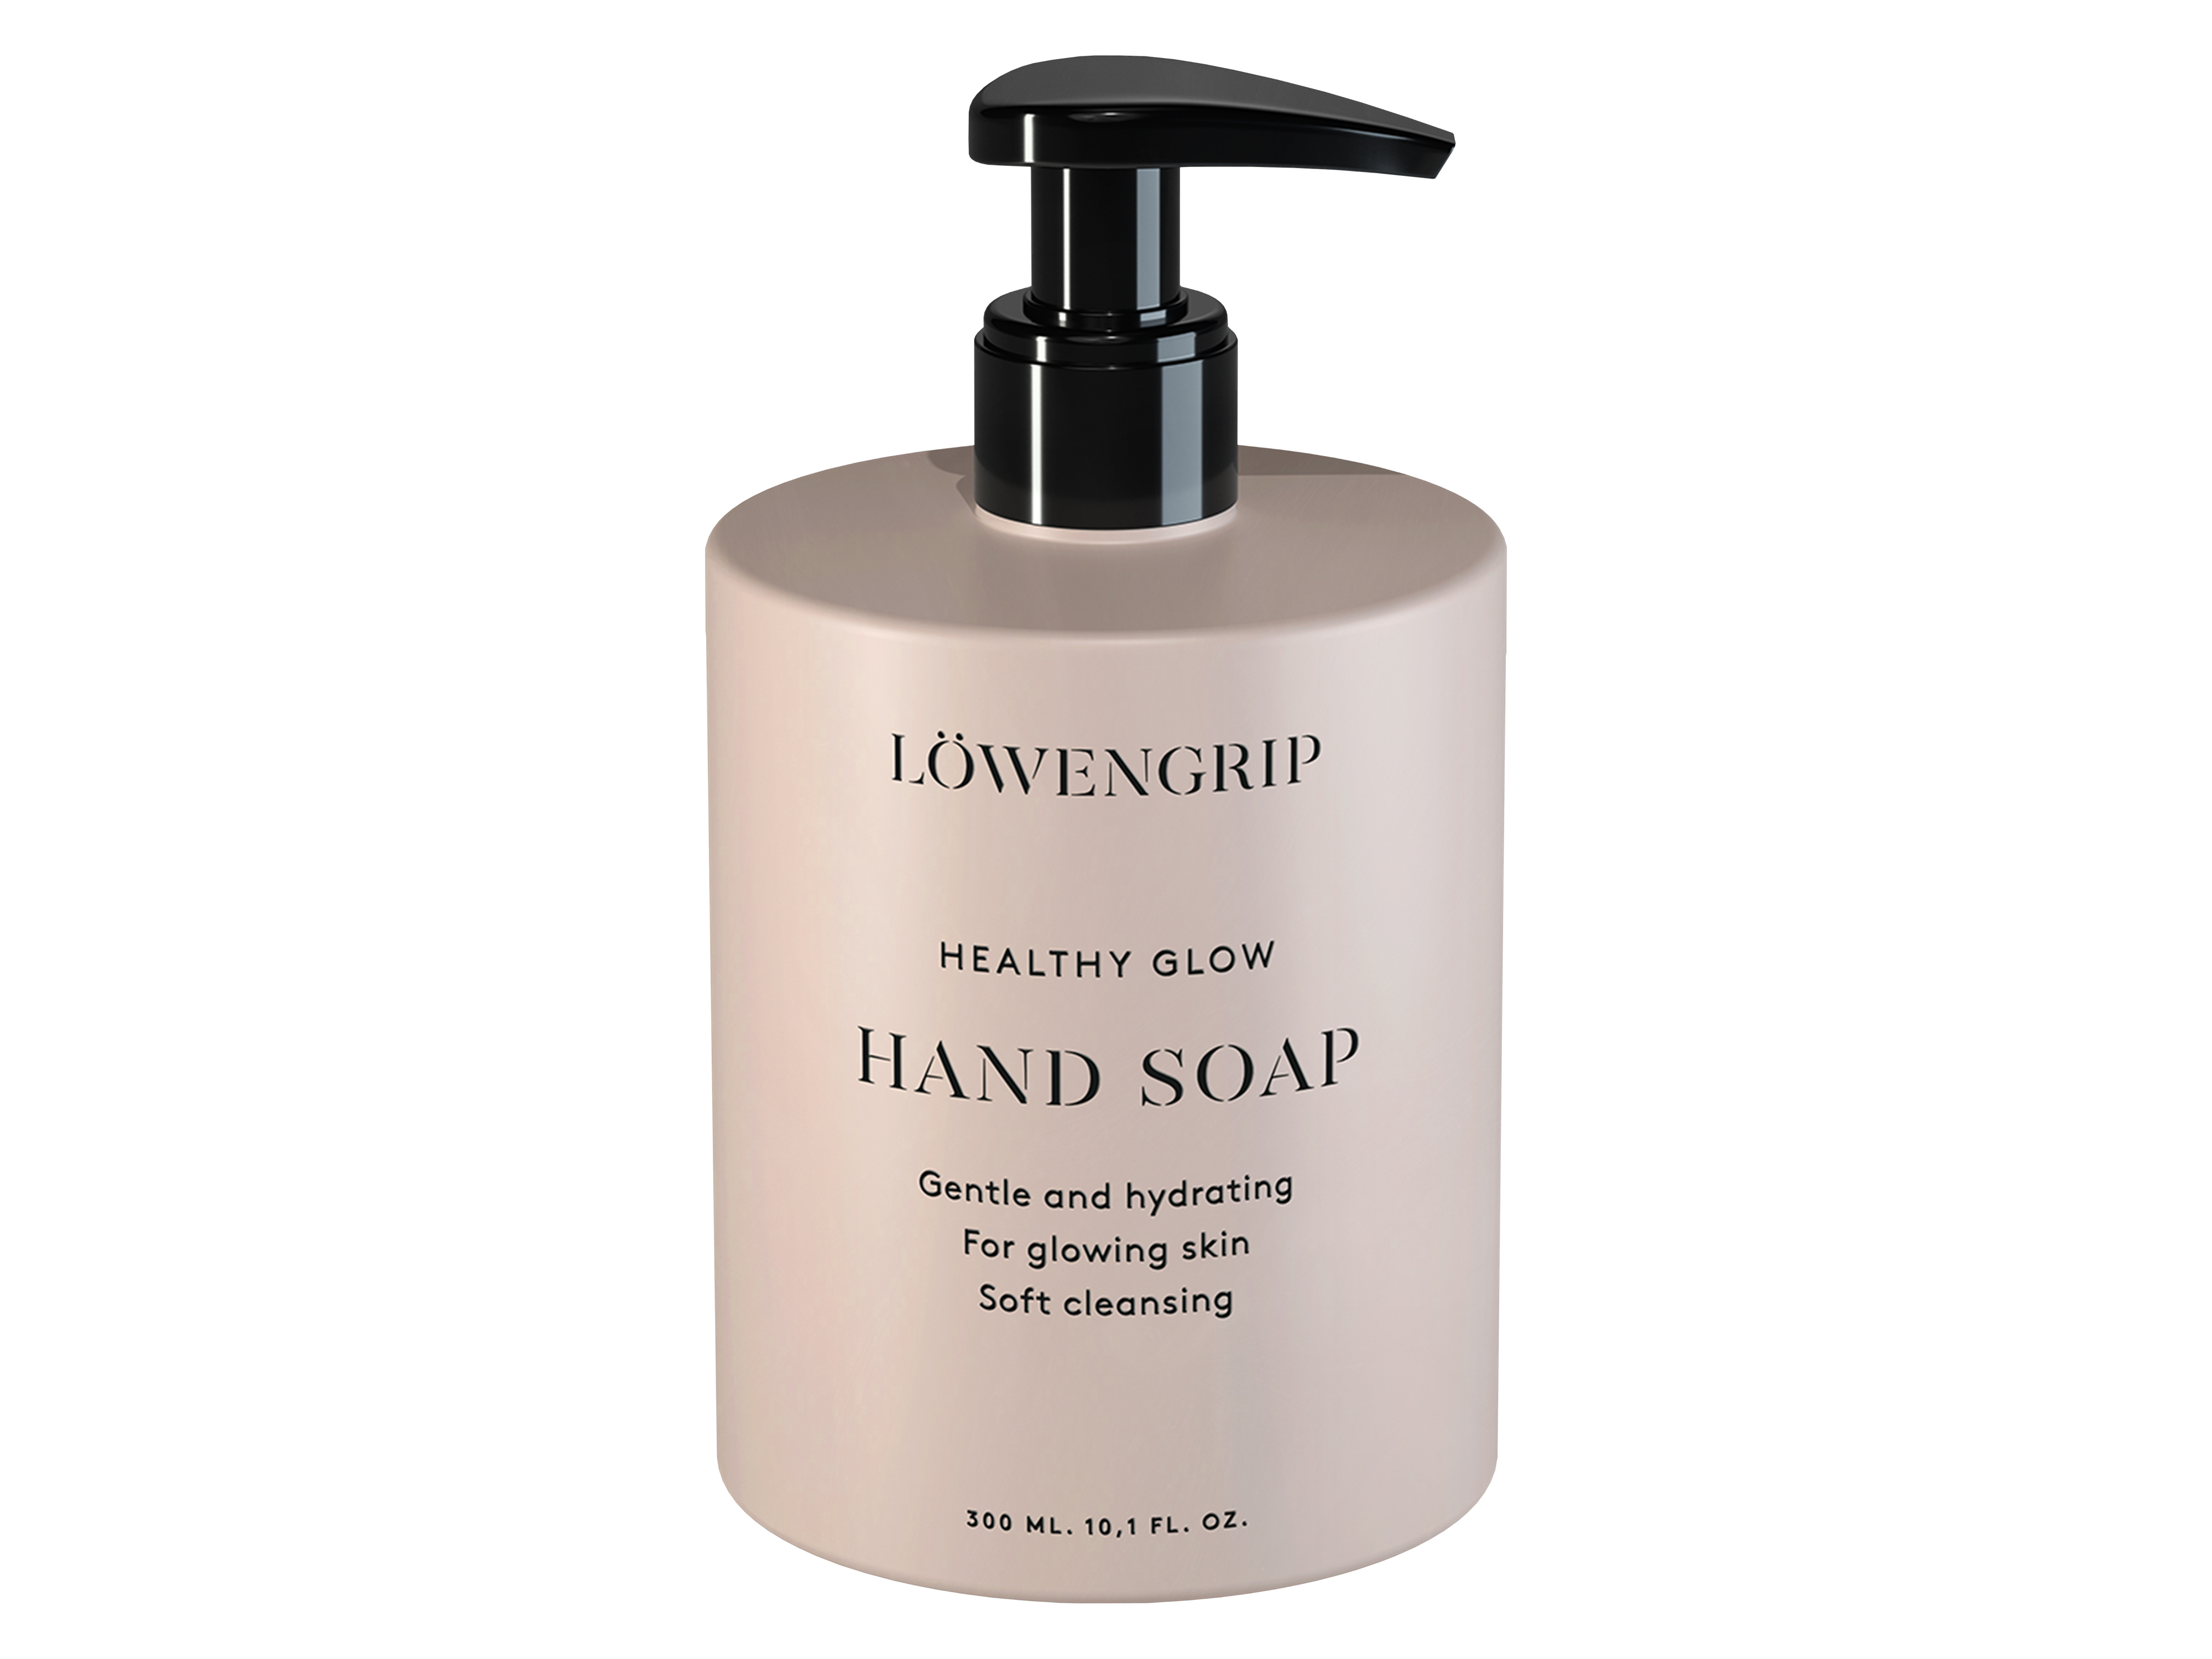 Löwengrip Healthy Glow Hand Soap, 300 ml